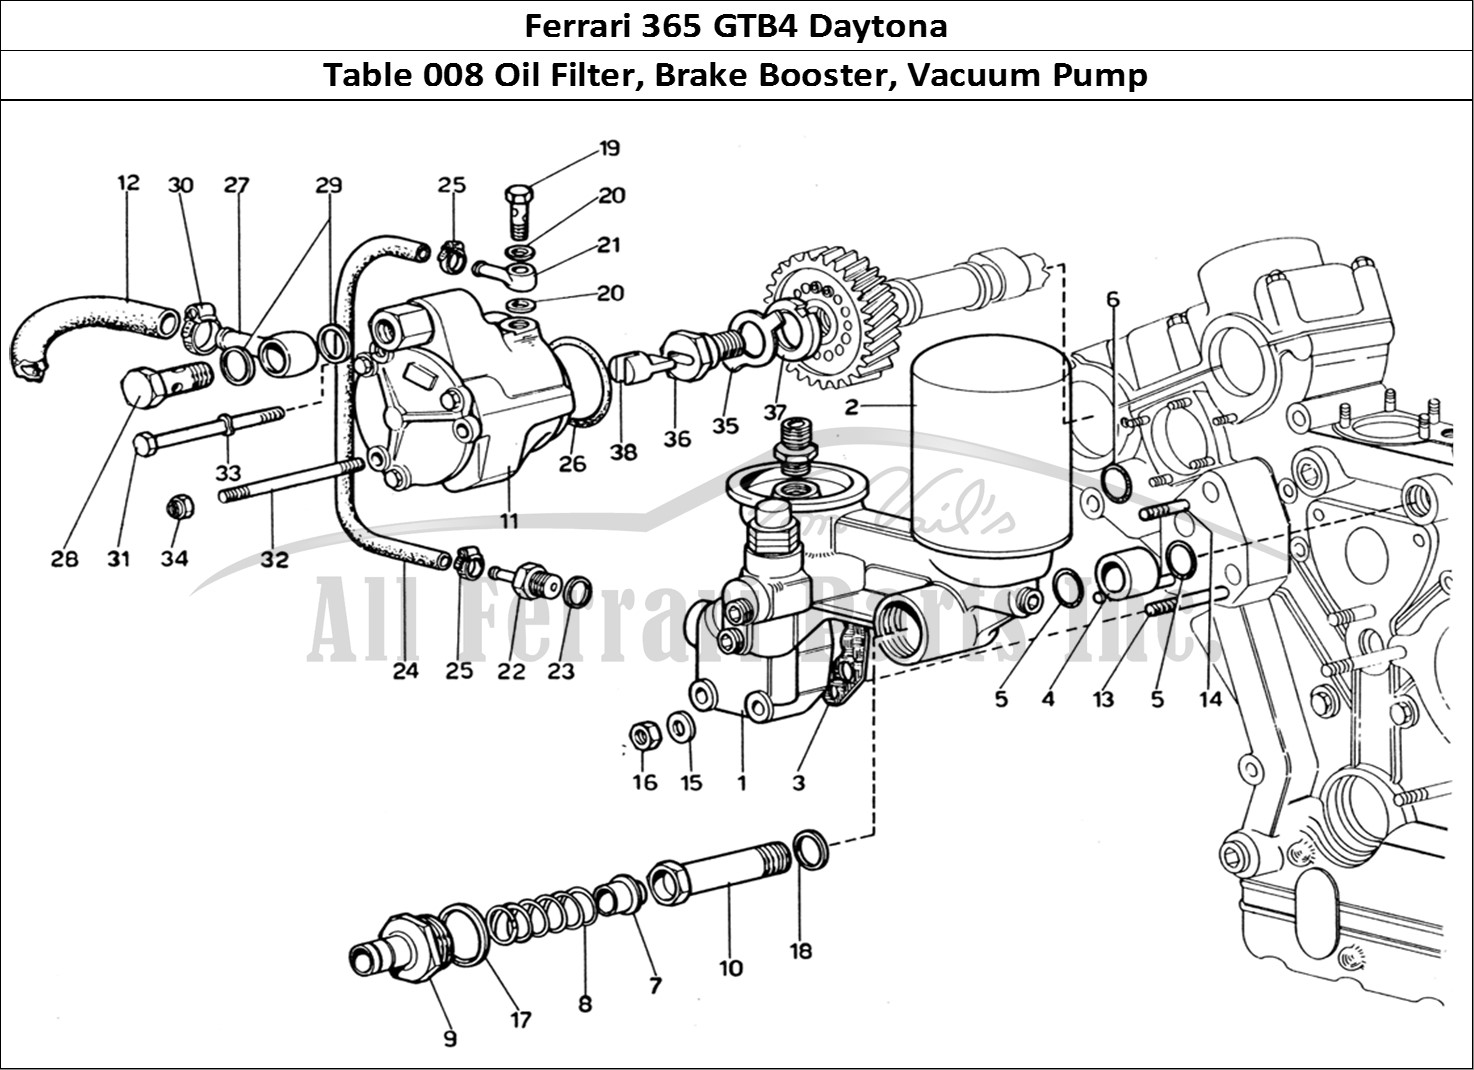 Ferrari Parts Ferrari 365 GTB4 Daytona (1969) Page 008 Engine Oil Filters & Brak